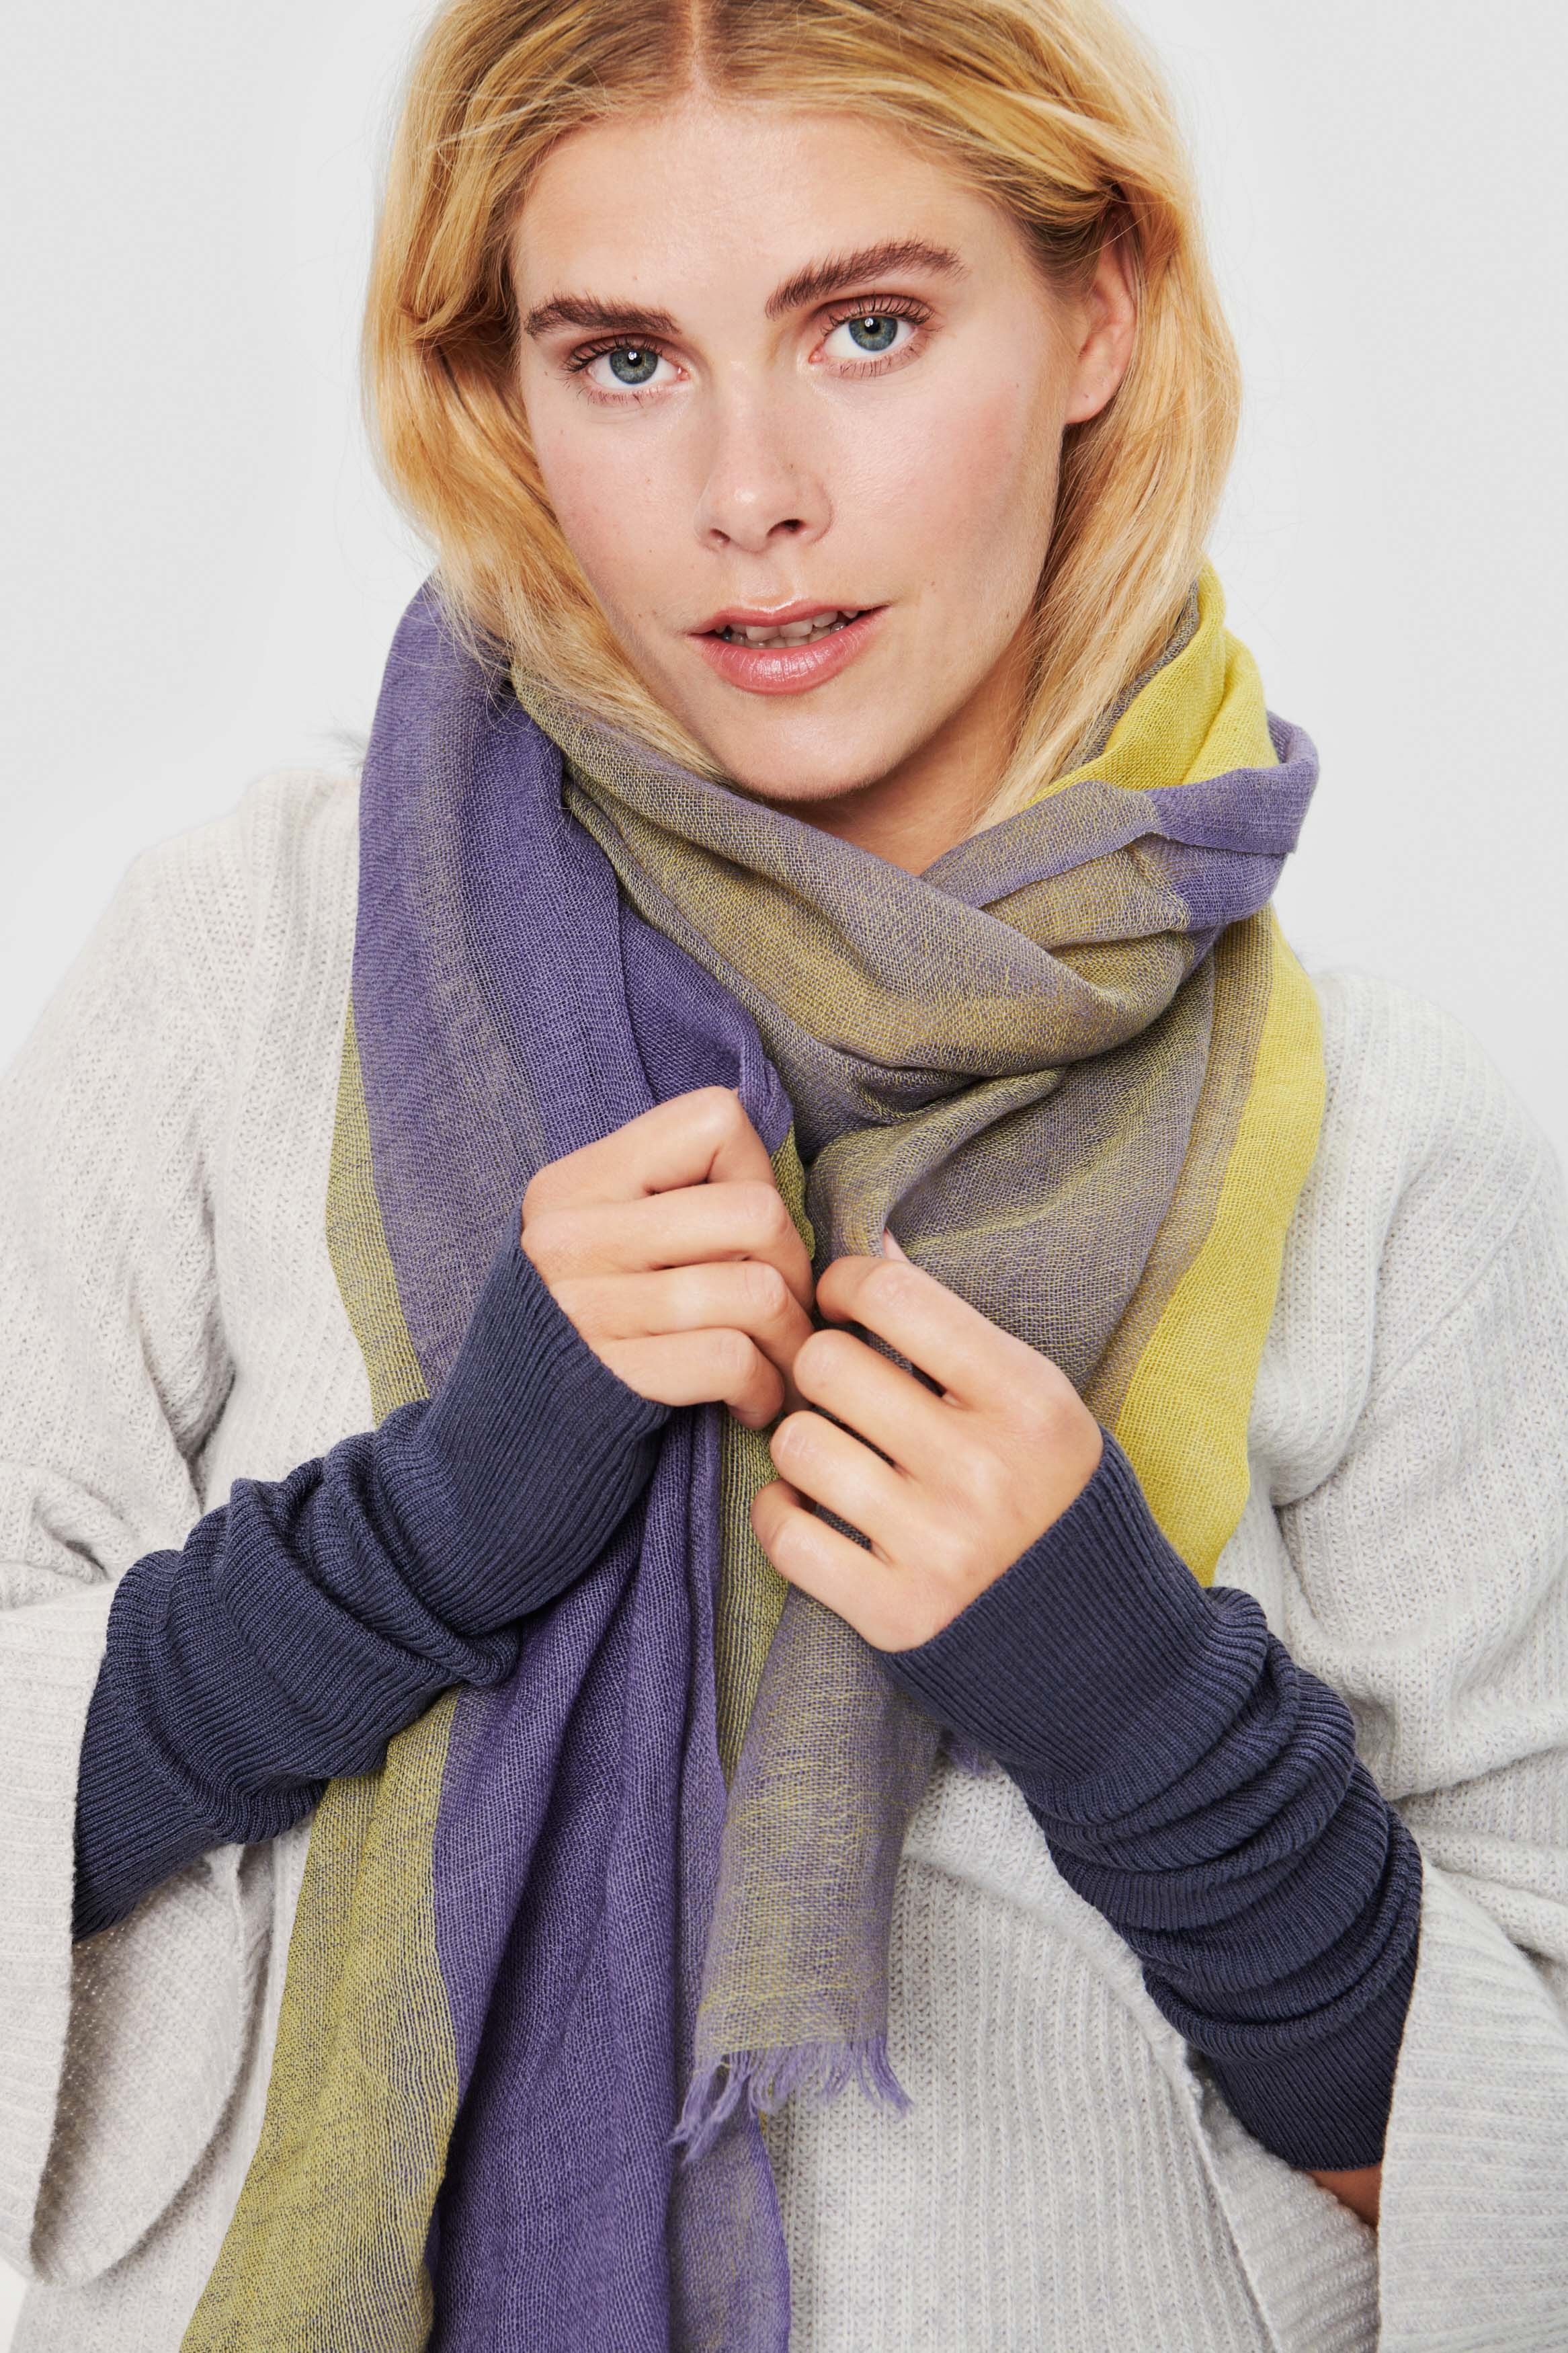 Changeant wool scarf